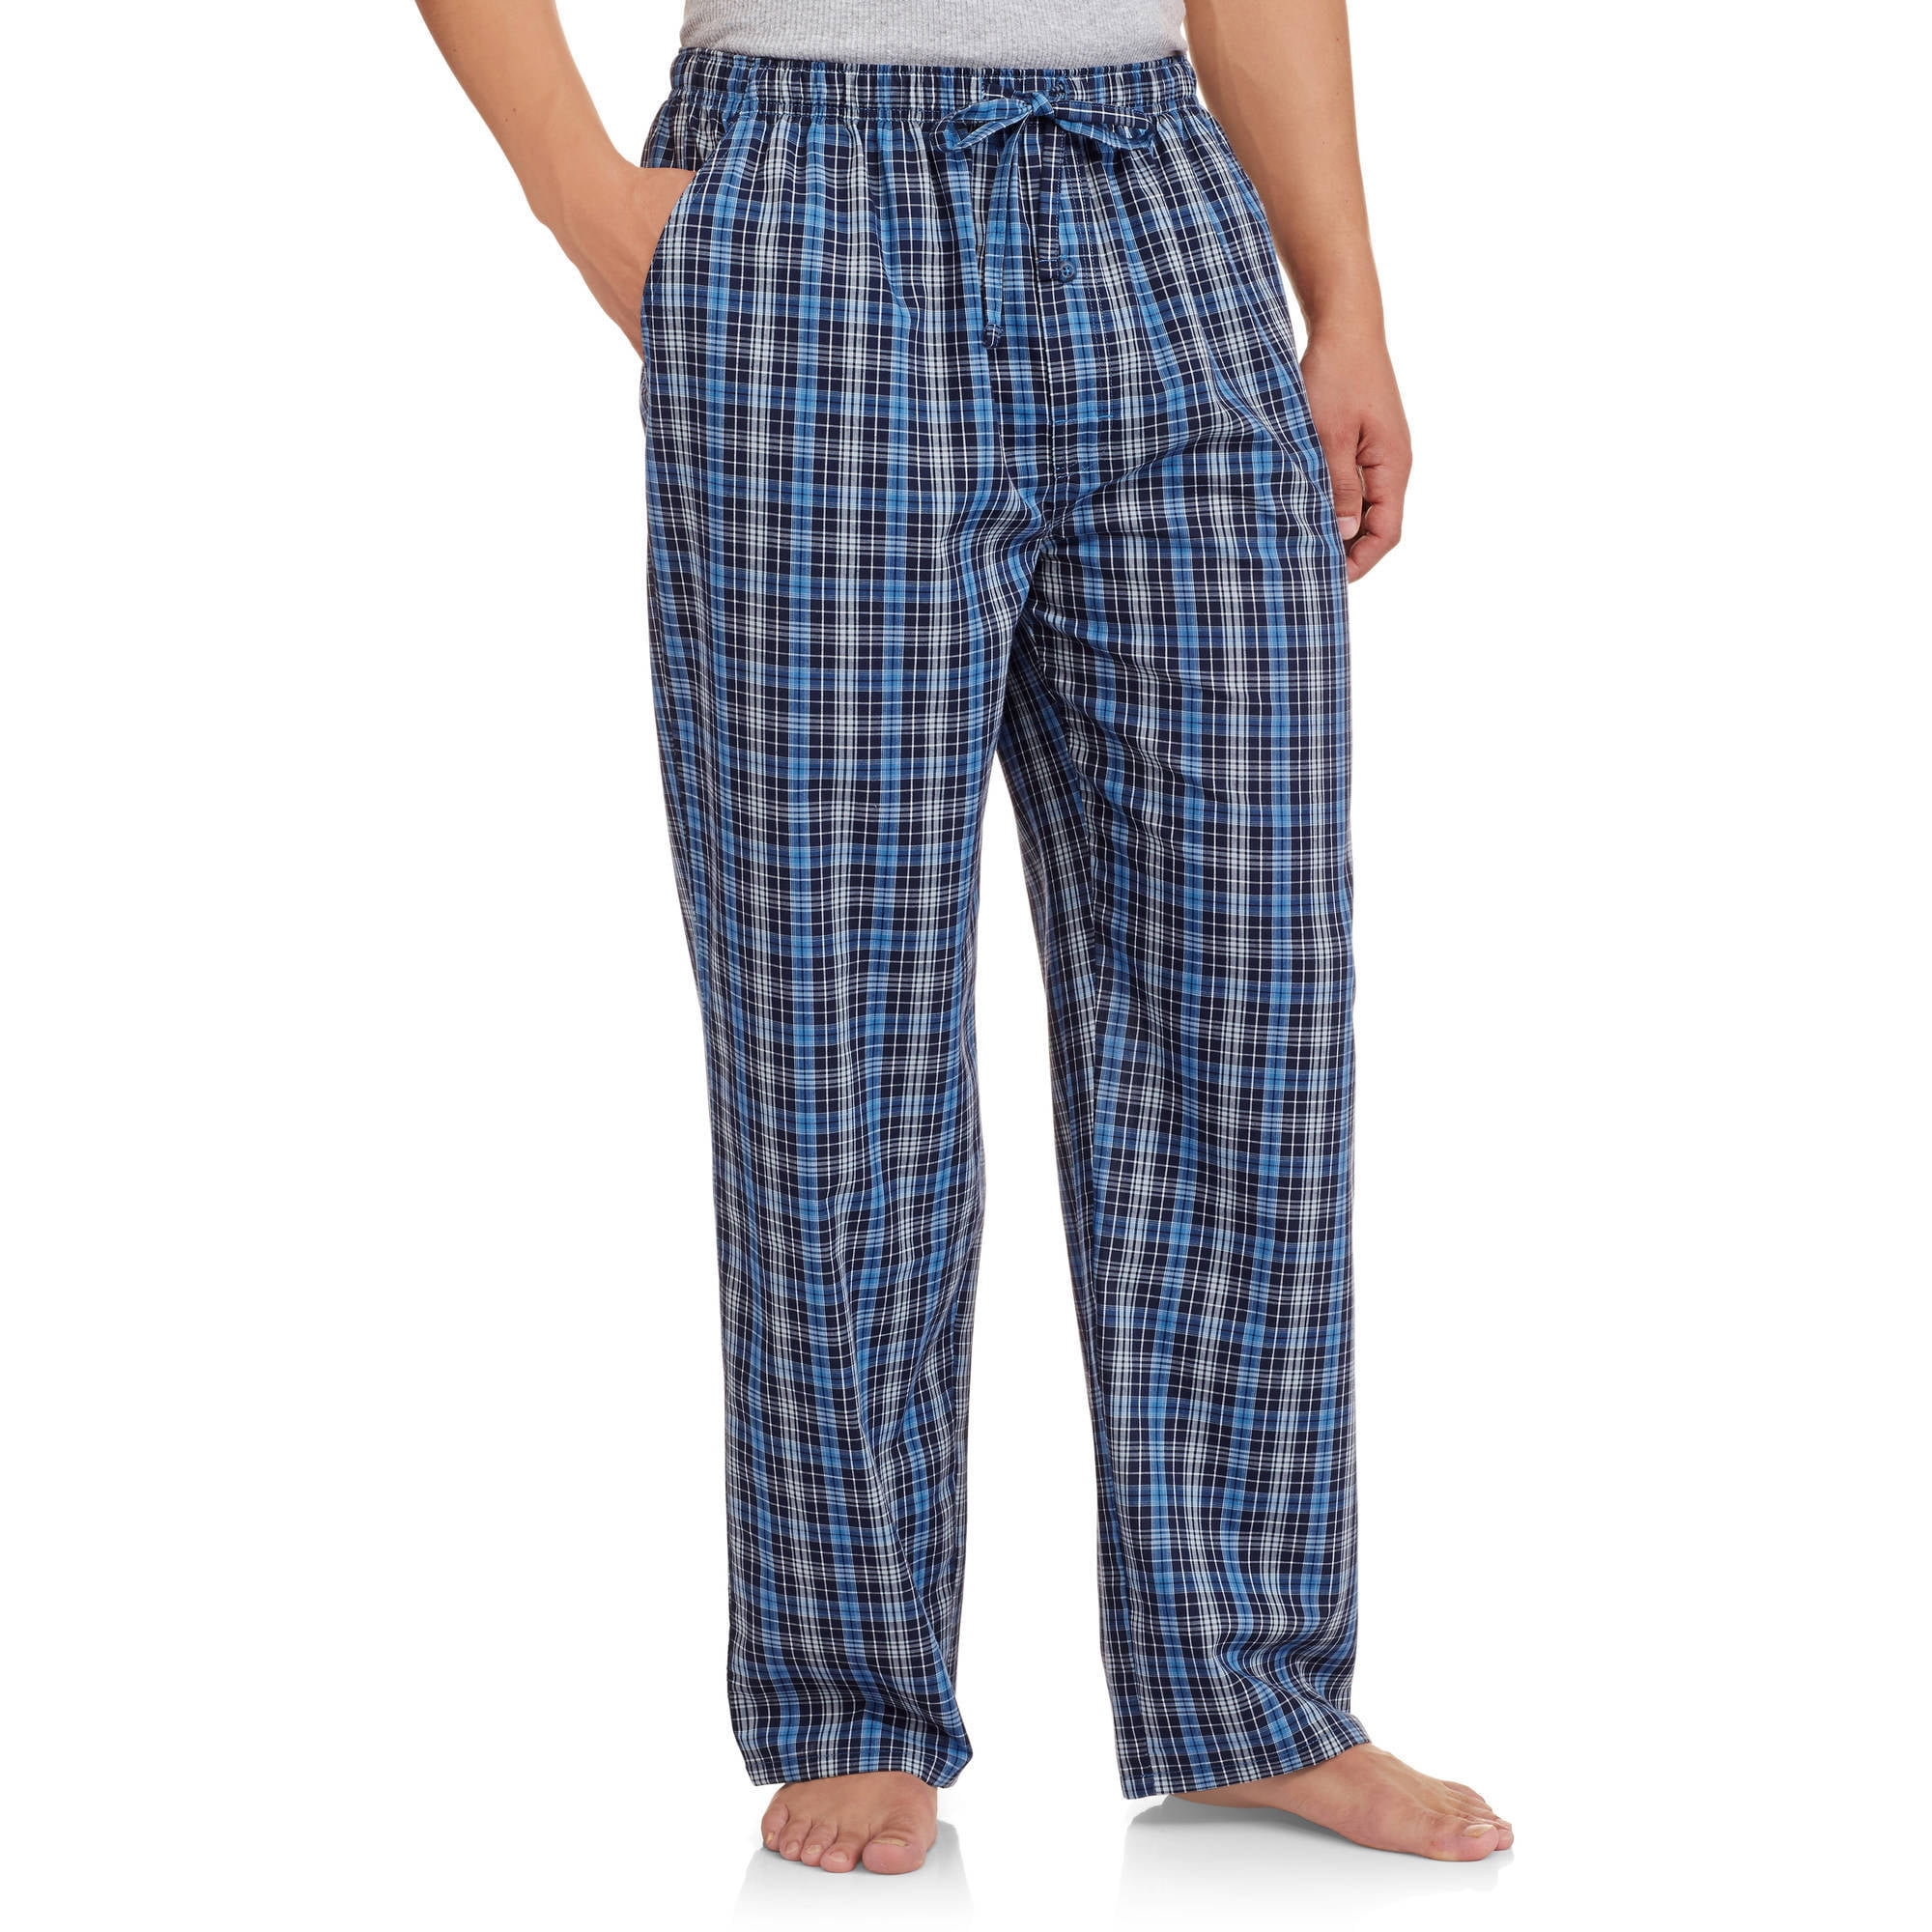 Men's Pajama Sets - Walmart.com